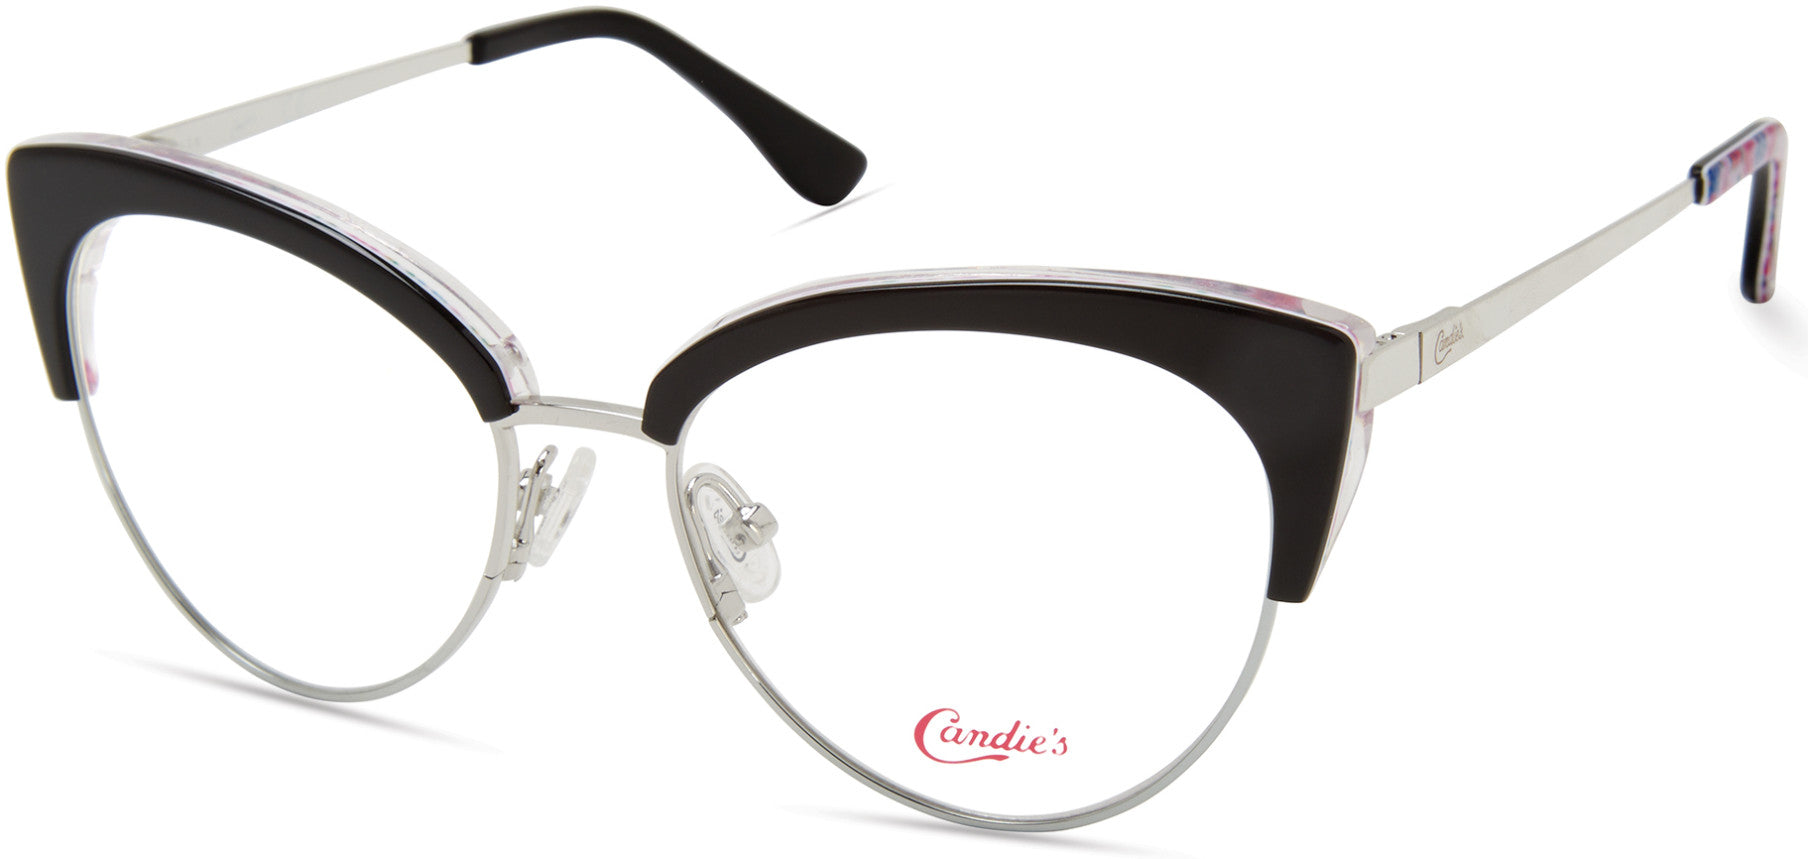 Candies CA0172 Cat Eyeglasses 001-001 - Shiny Black